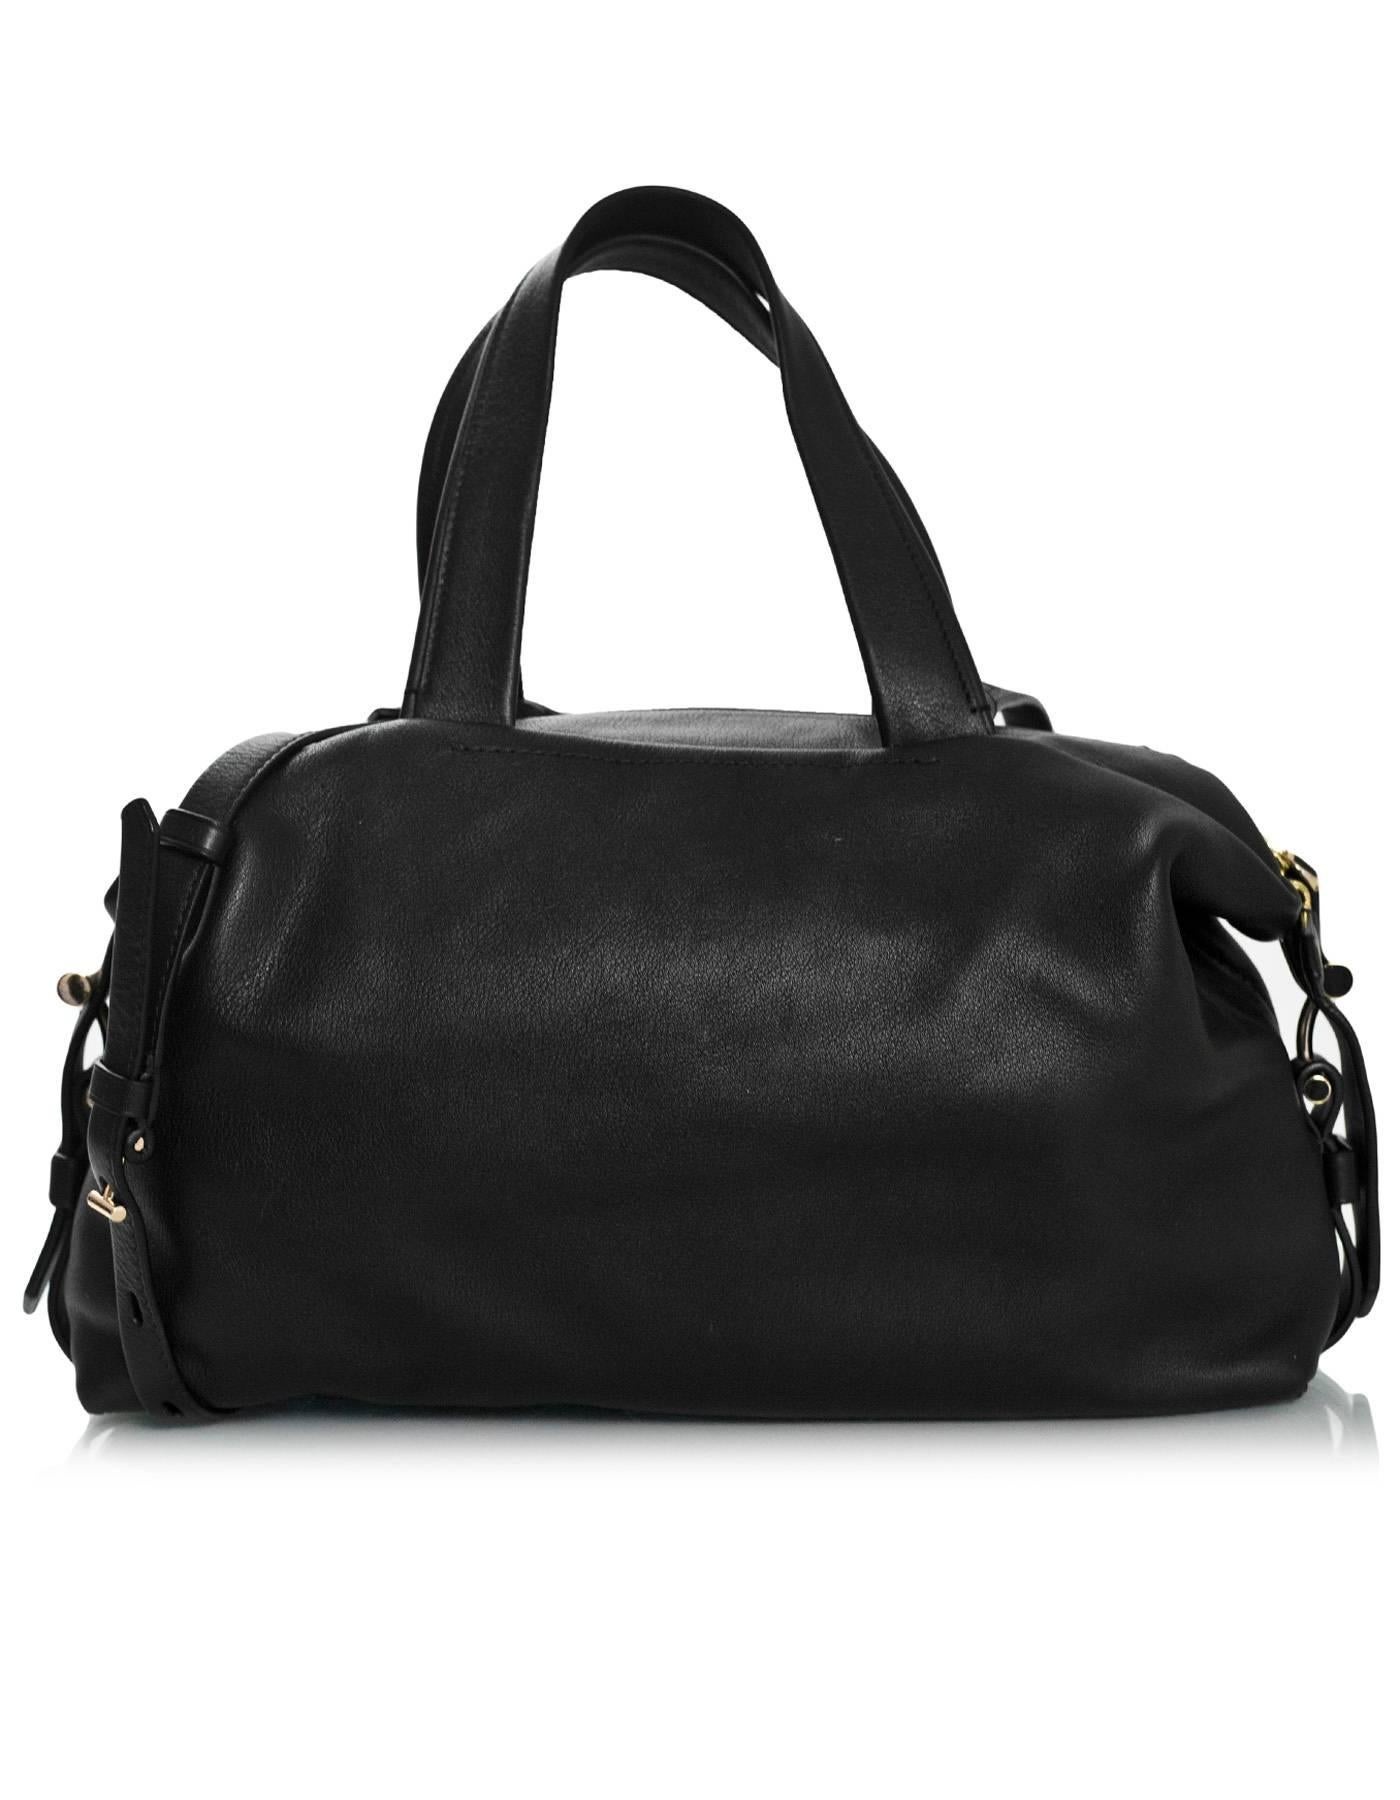 Women's Reed Krakoff Black Leather Mini Atlas Satchel Bag